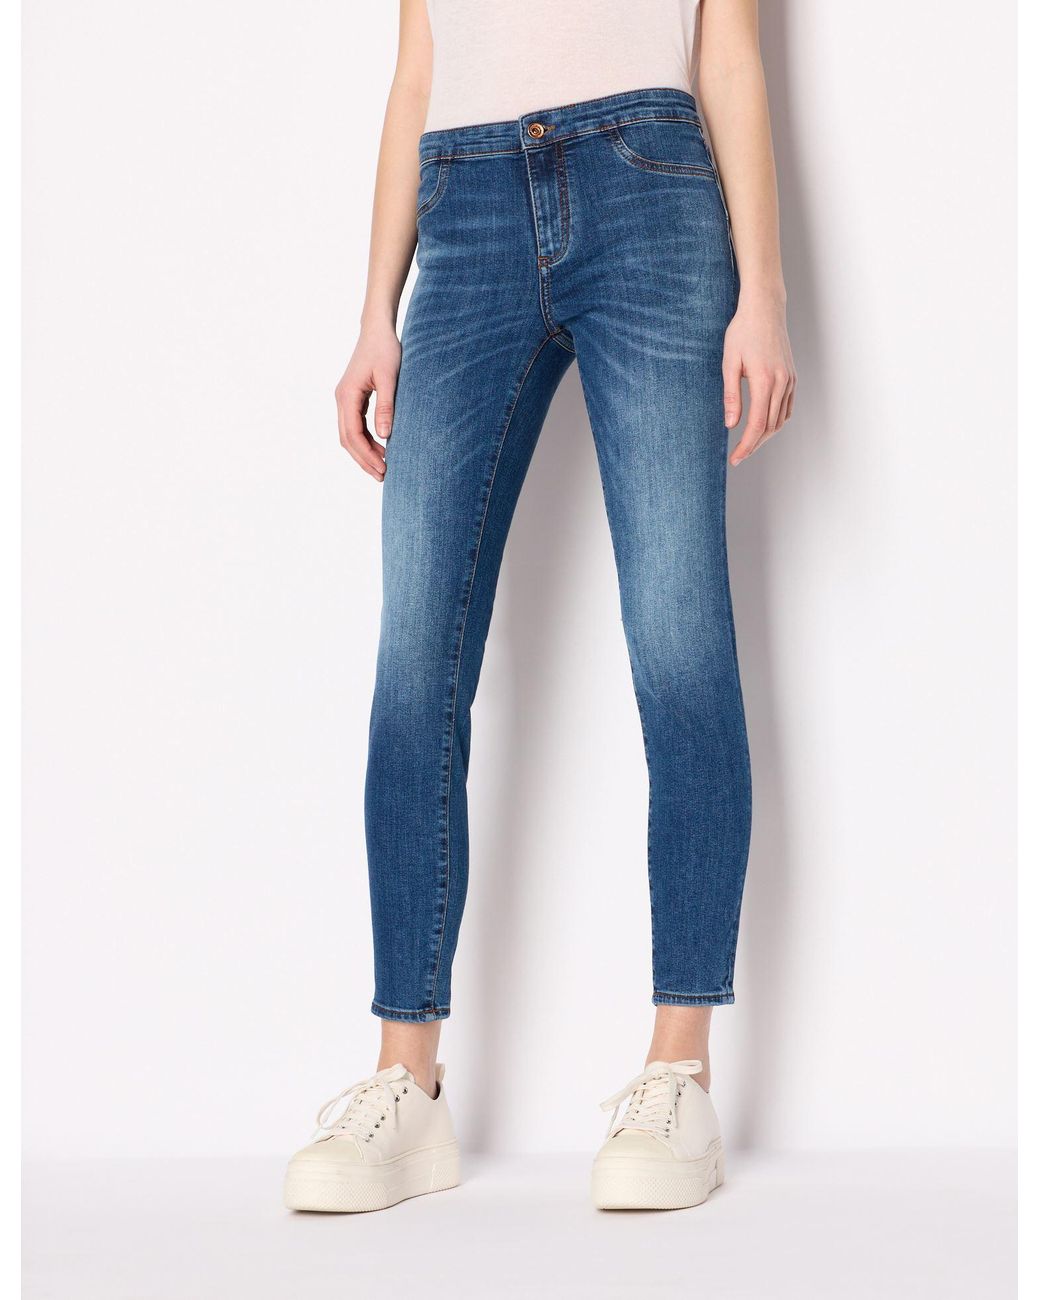 J69 super skinny lift-up stretch cotton coated denim jeans